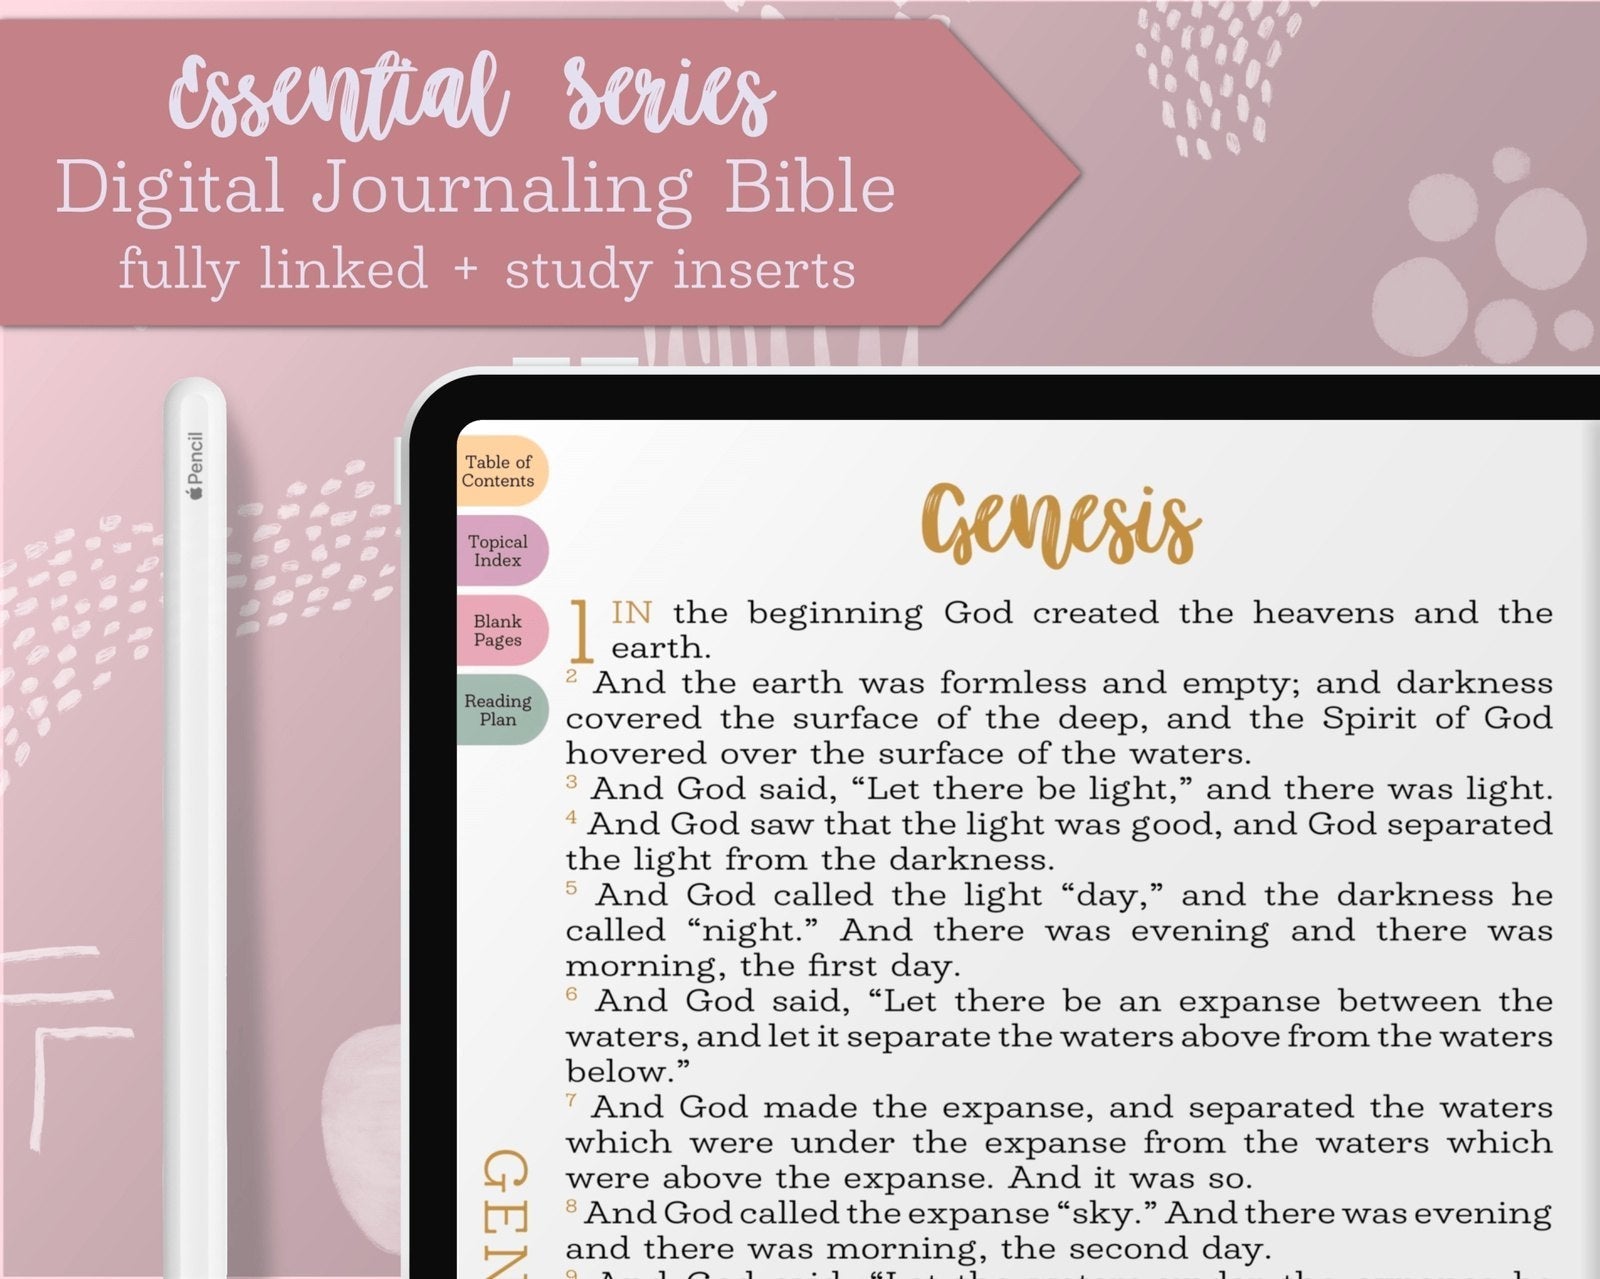 Bible journaling printable/ tropical Bible journaling printable/ Bible  journaling kit/ prayer journal stickers/Bible stickers/faith stickers